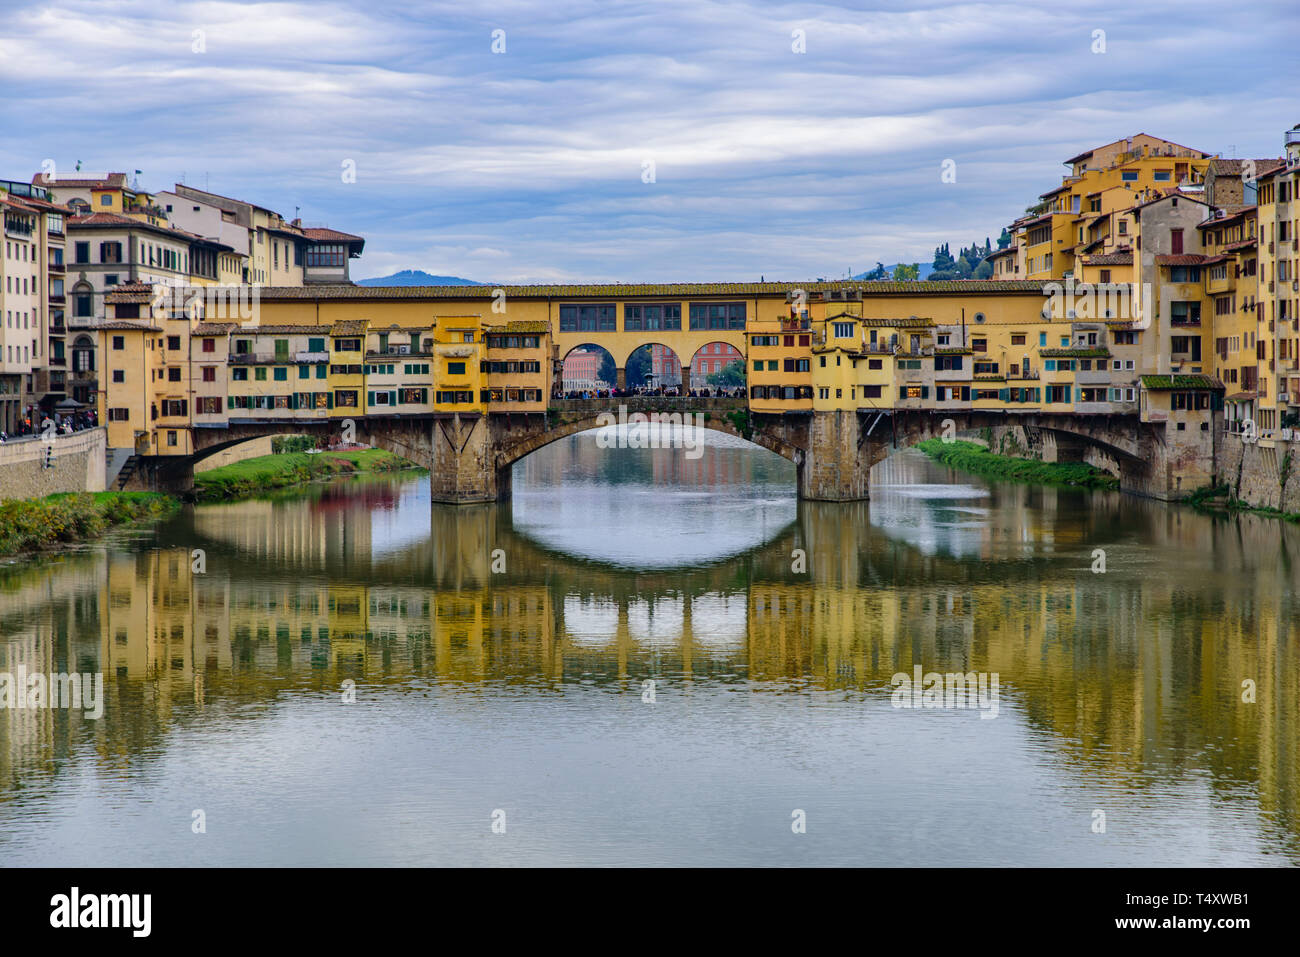 Ponte Vecchio (Old Bridge), a medieval stone bridge with shops on it, Florence, Italy Stock Photo